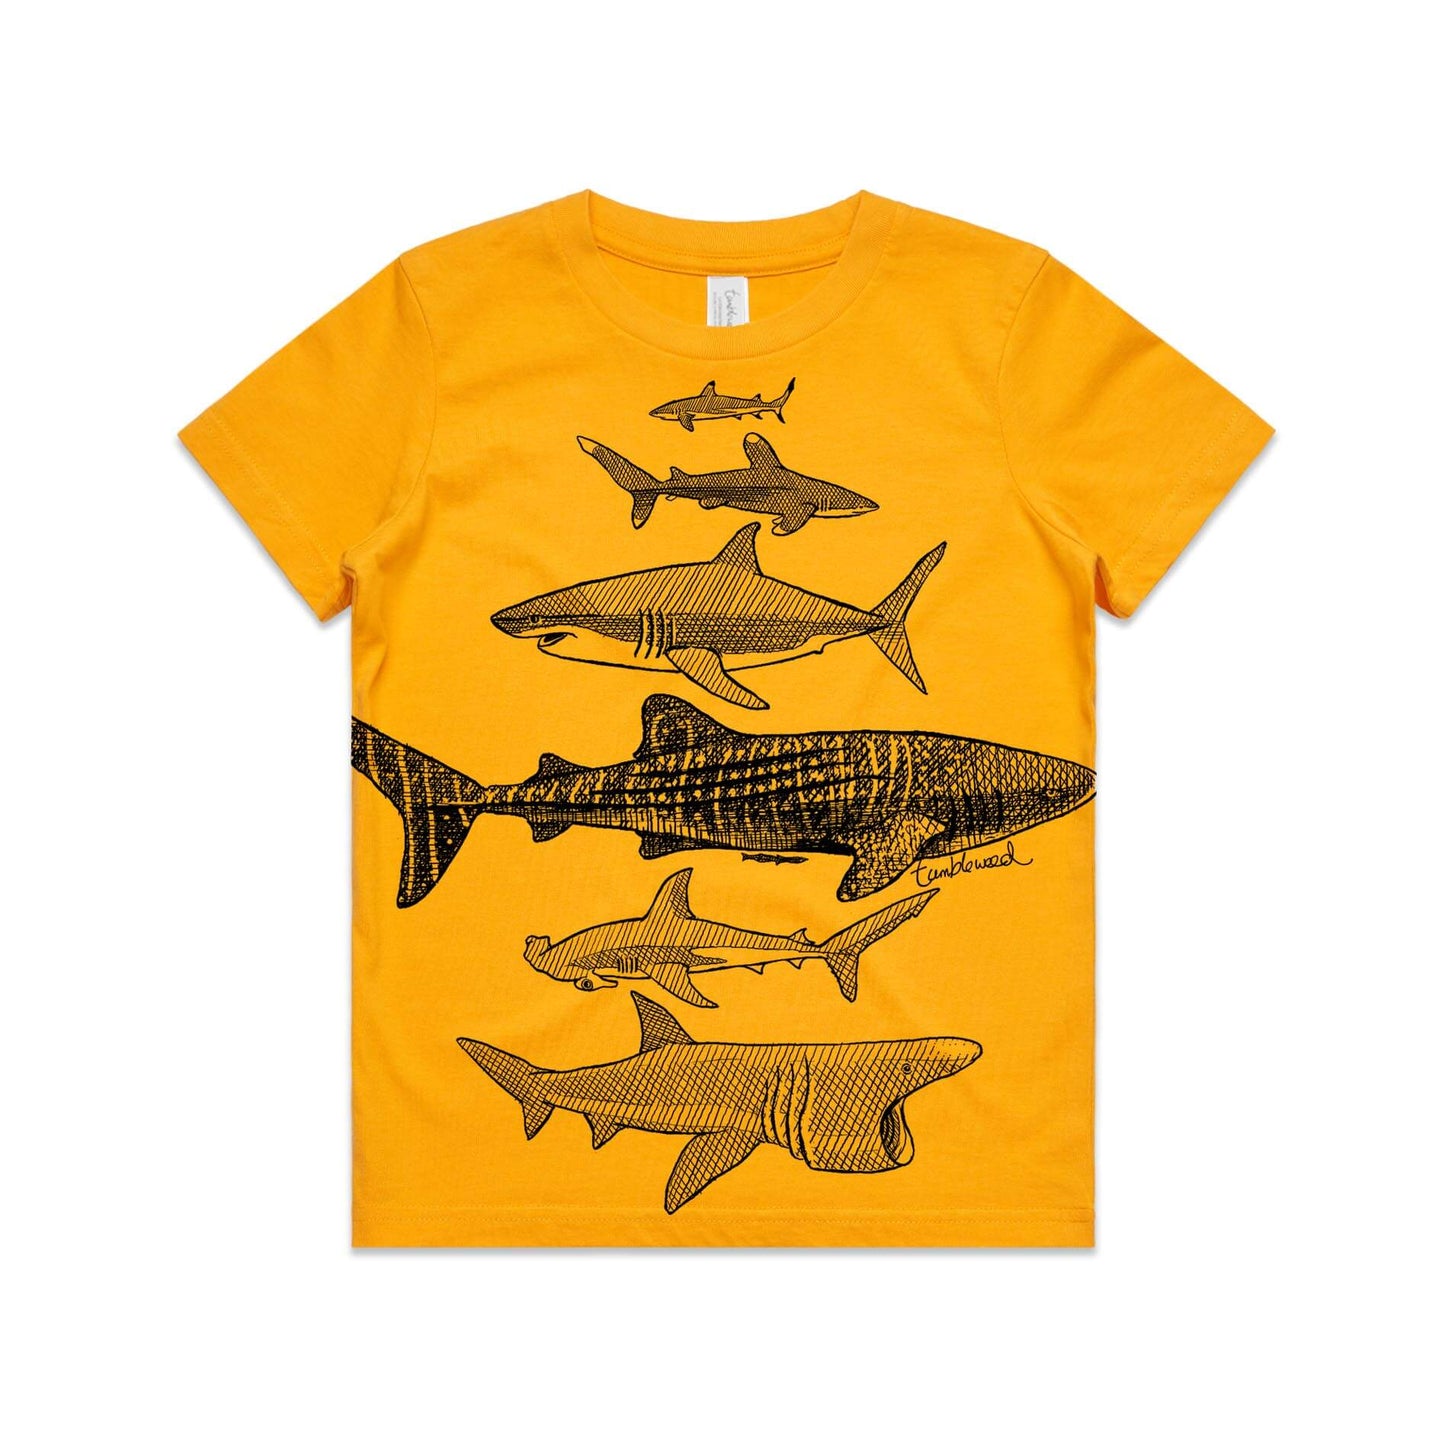 Gold, cotton kids' t-shirt with screen printed Kids shark design.